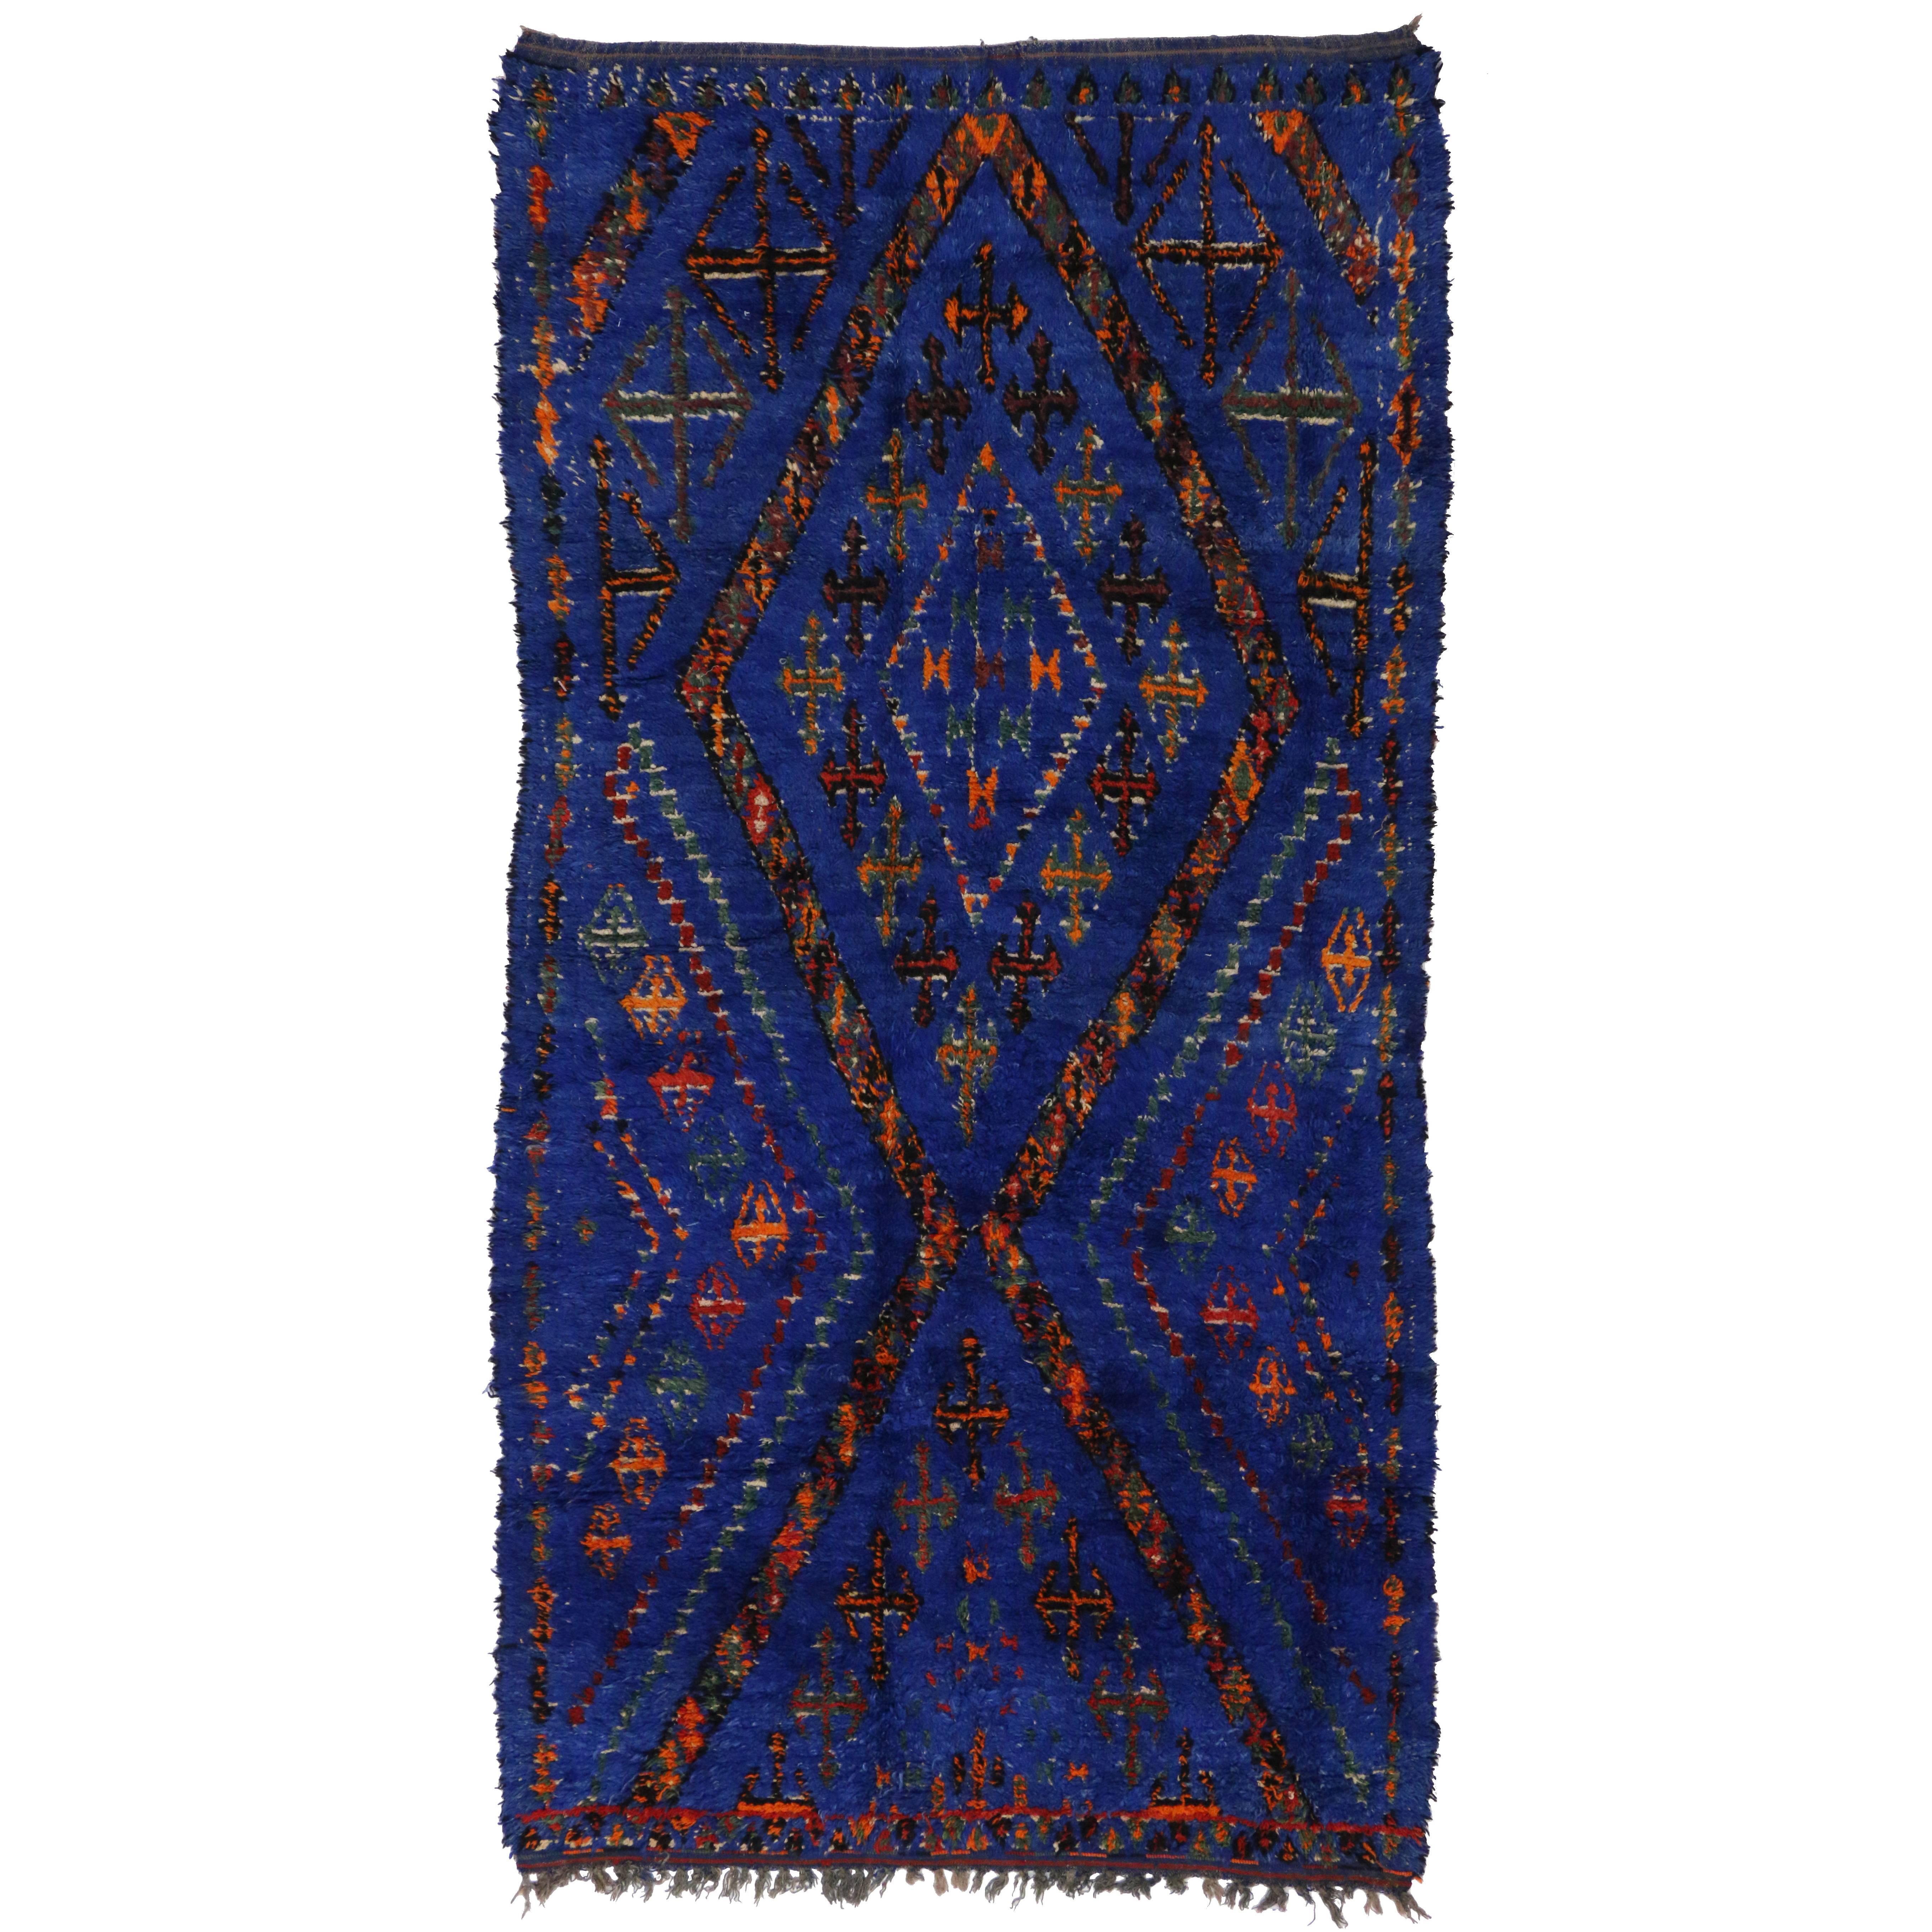 Vintage Berber Moroccan Rug with Tribal Style, Blue Indigo Beni Mguild Carpet